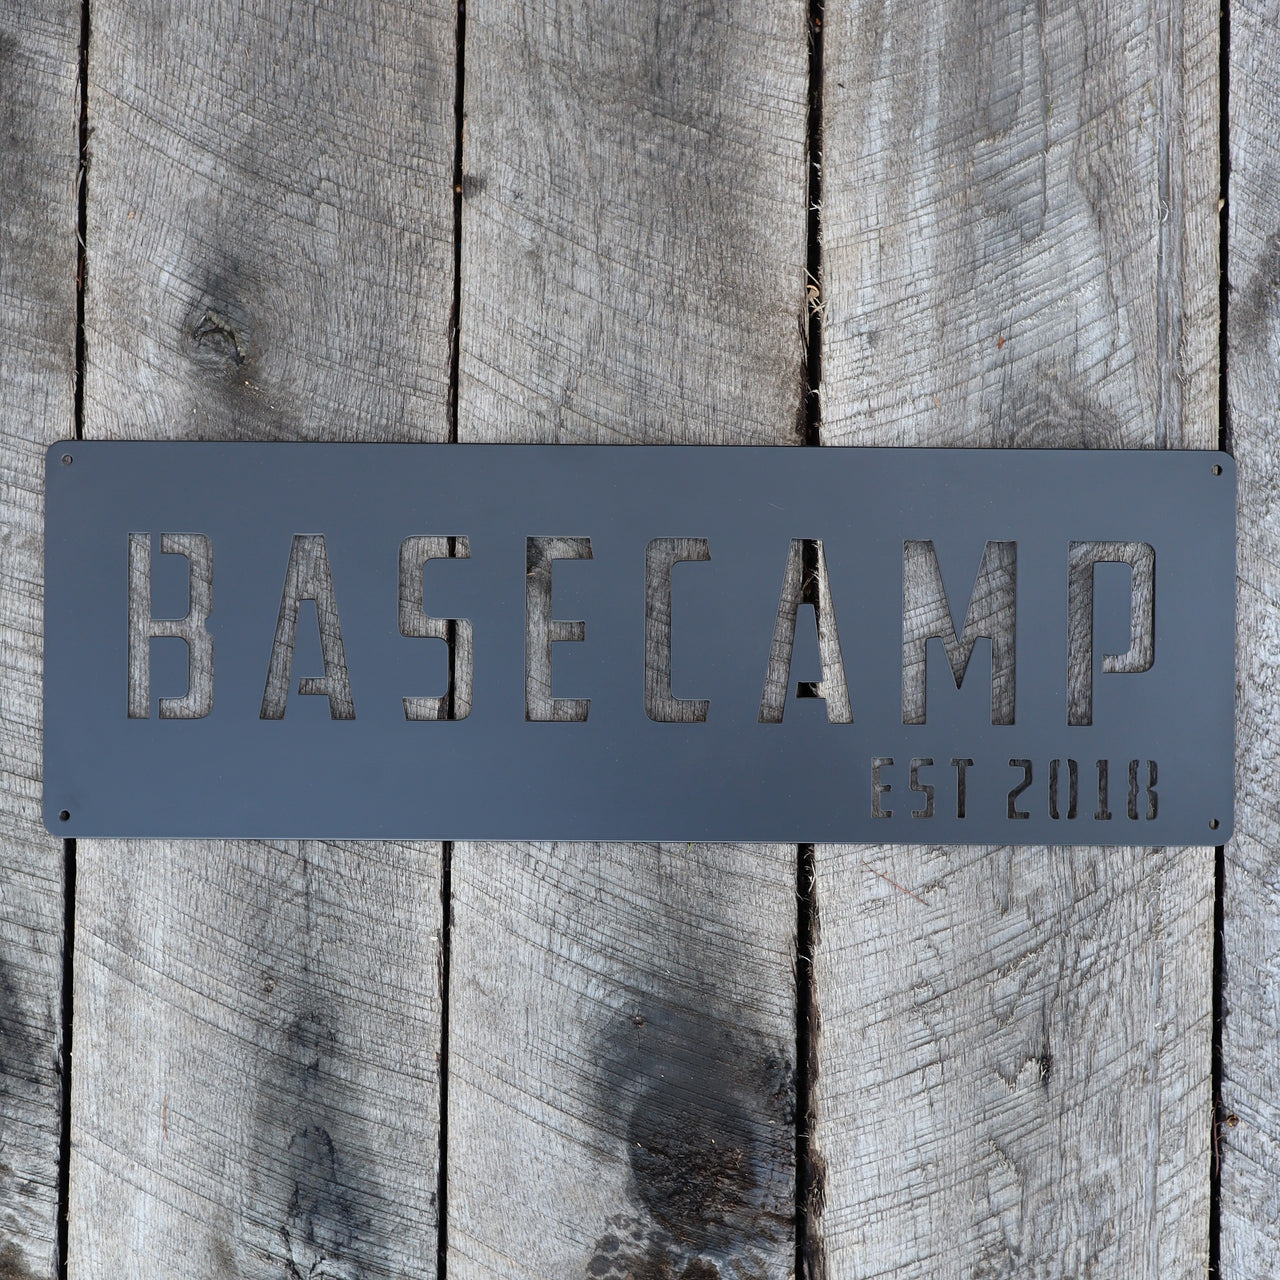 Personalized Metal Basecamp Sign - Camping, Hiking, Backpacking Decor Wall Art - Base Camp Name Established Year